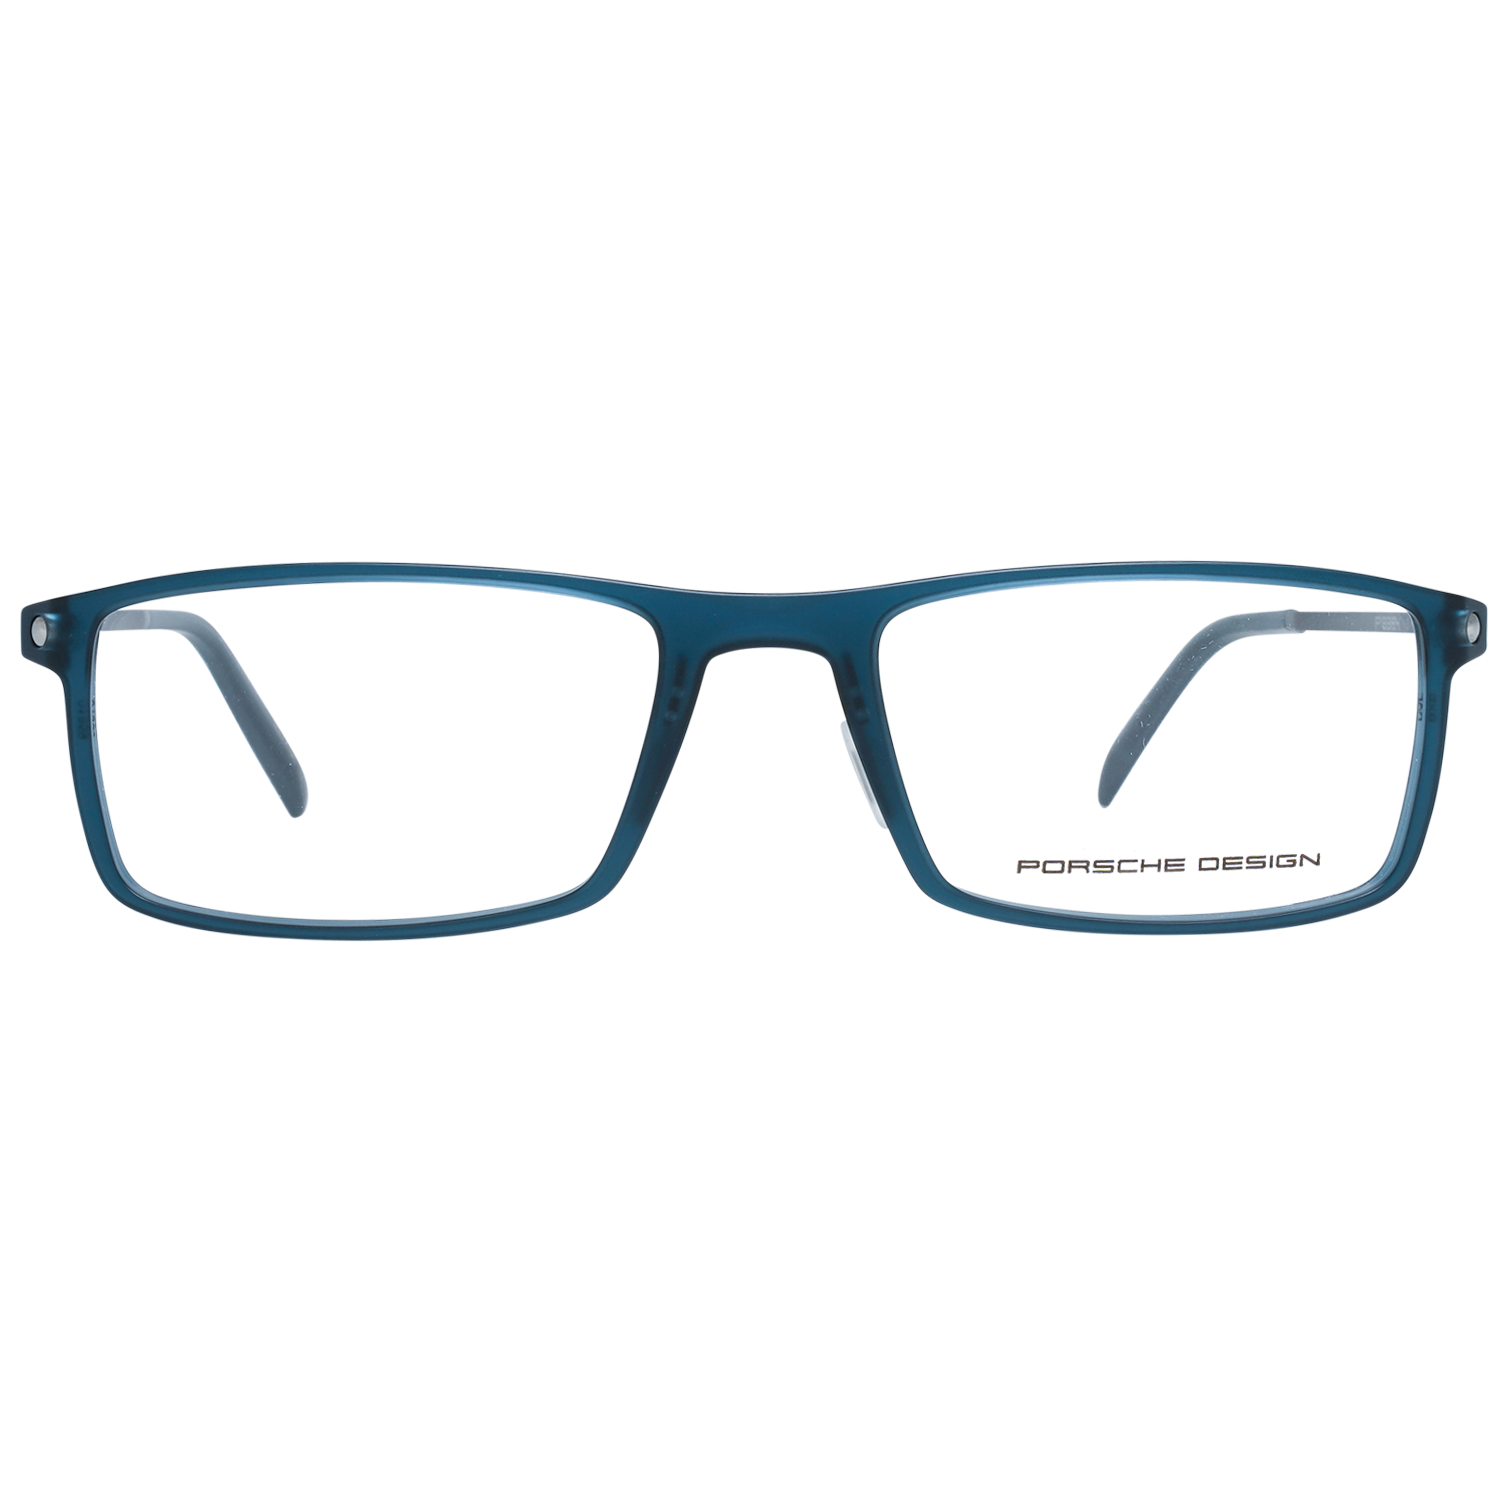 Porsche Design Eyeglasses Porsche Design Glasses Frames P8384 B 55 Eyeglasses Eyewear UK USA Australia 